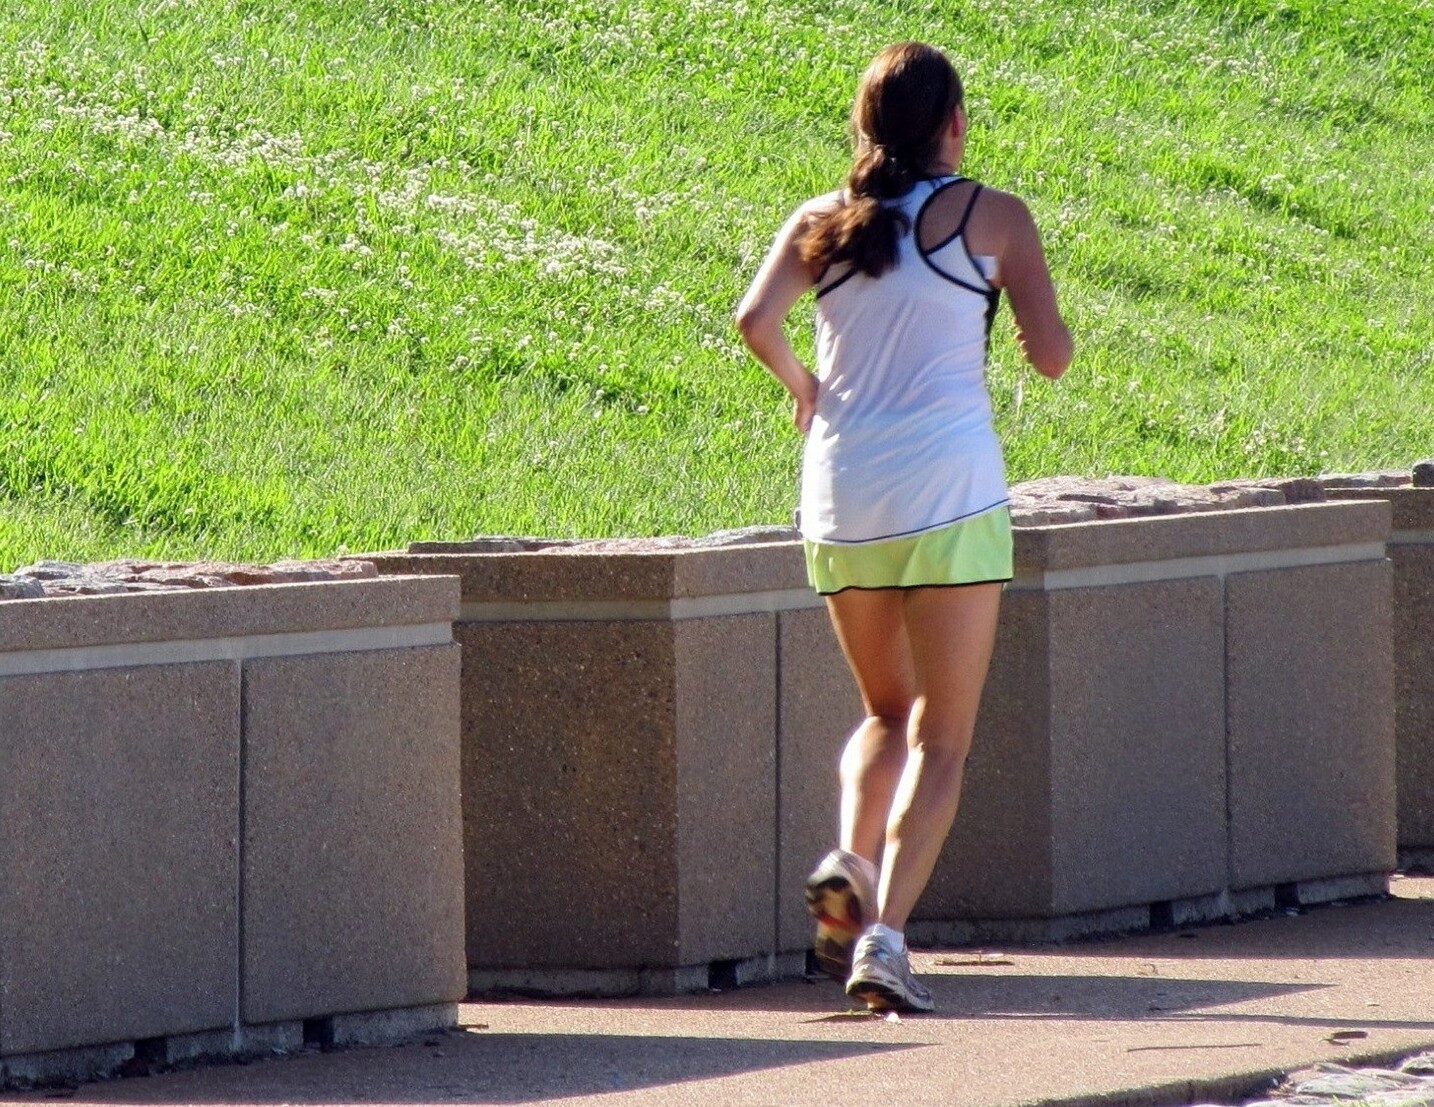 Slow Jogging at Walking Speed Compared to Regular Jogging